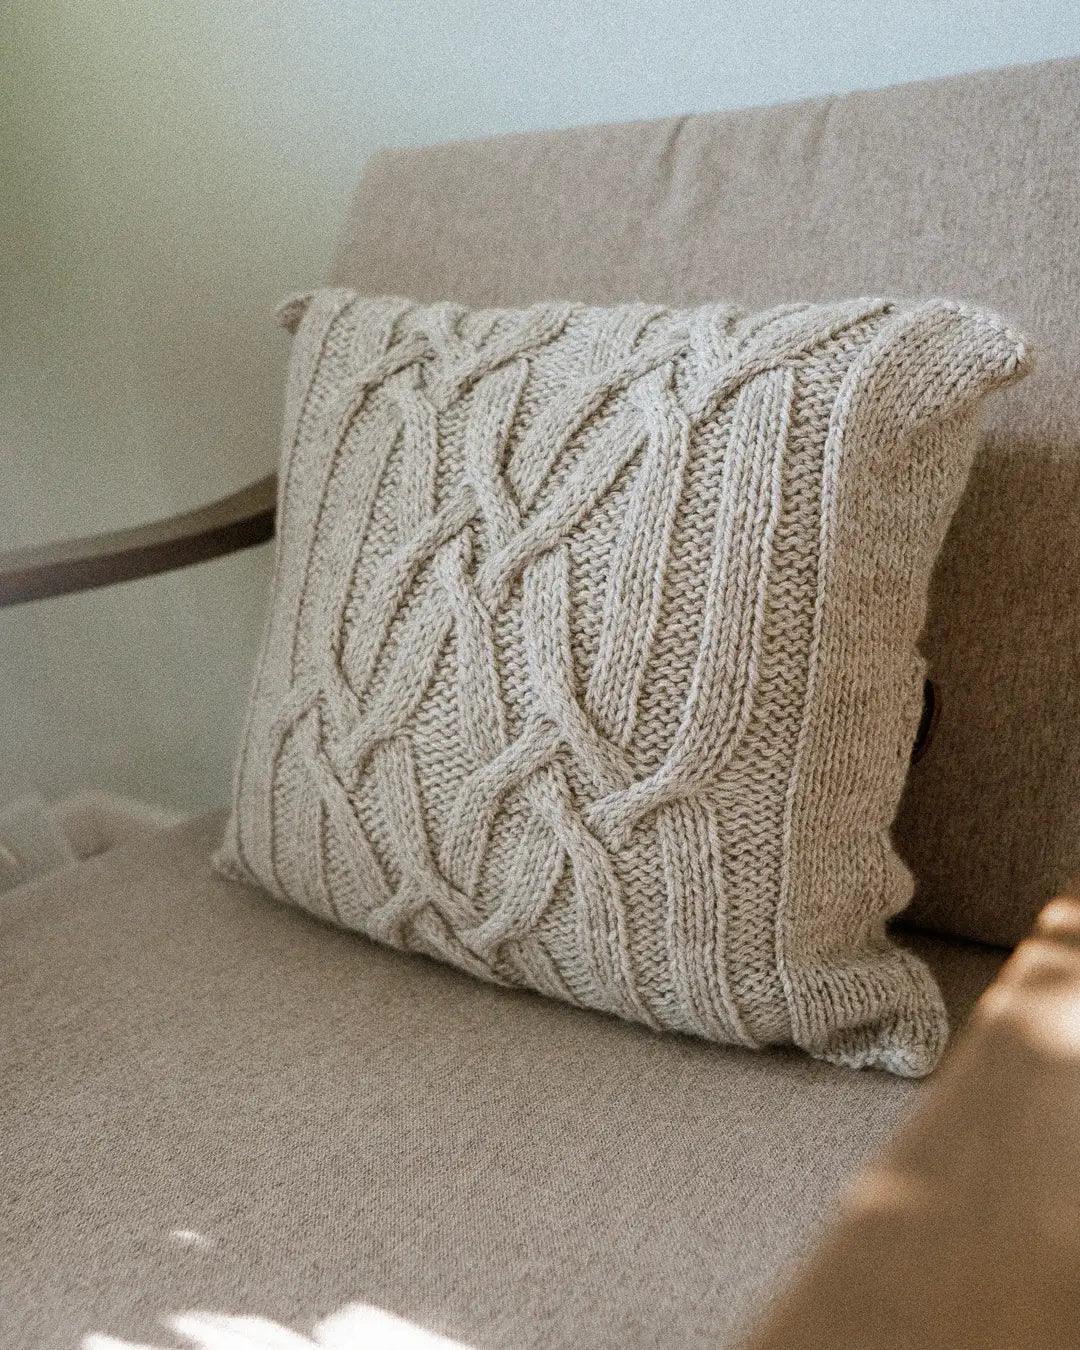 Friendship Cushion - Knitting Pattern (PDF) - Aimee Sher Makes